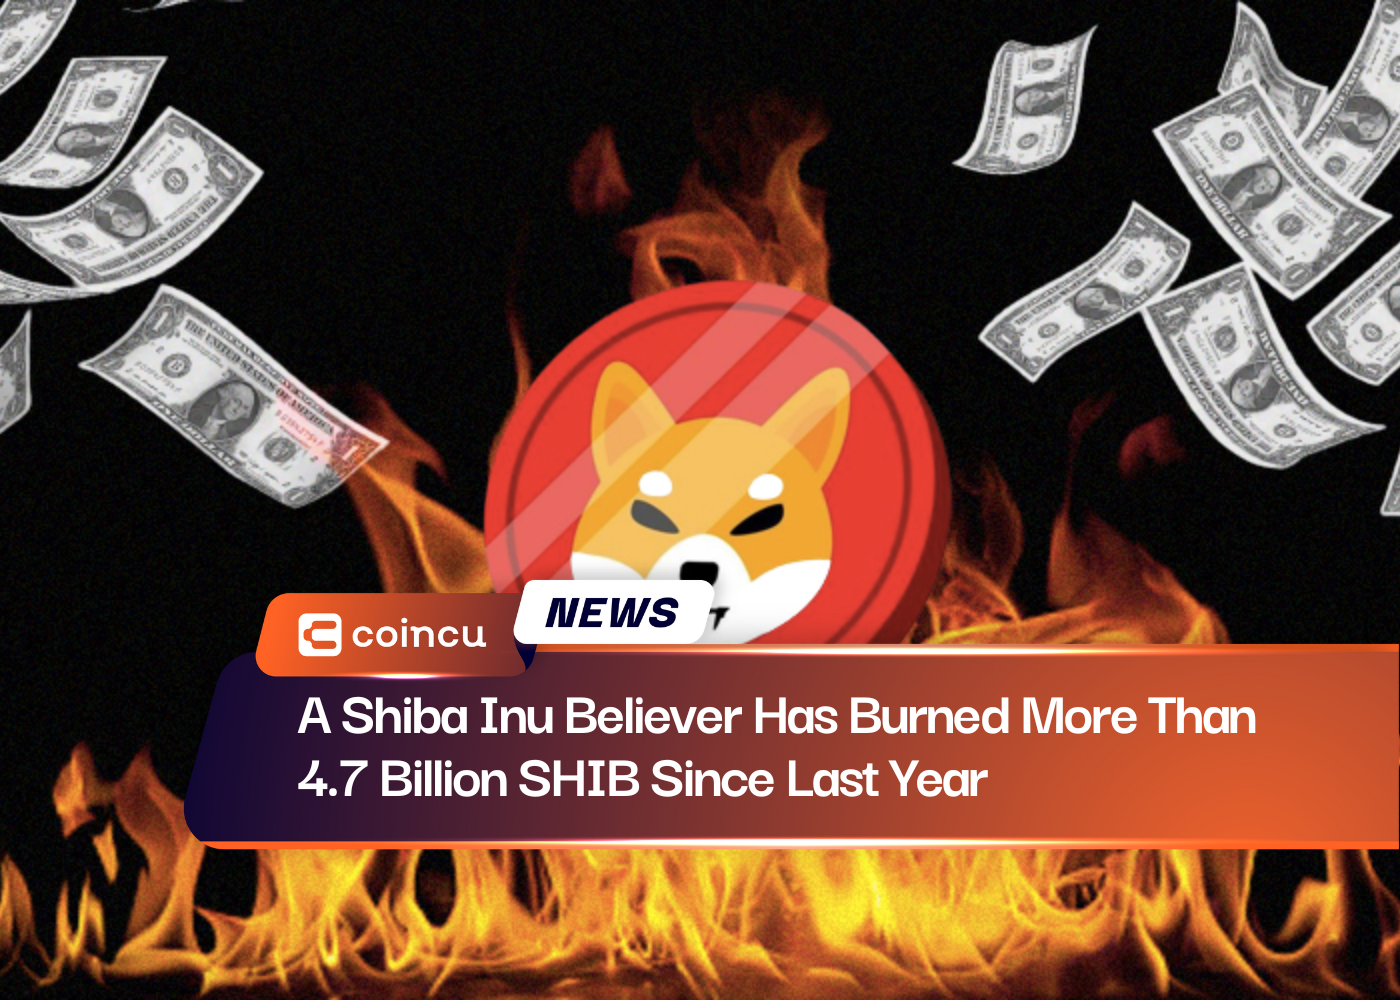 A Shiba Inu Believer Has Burned More Than 4.7 Billion SHIB Since Last Year